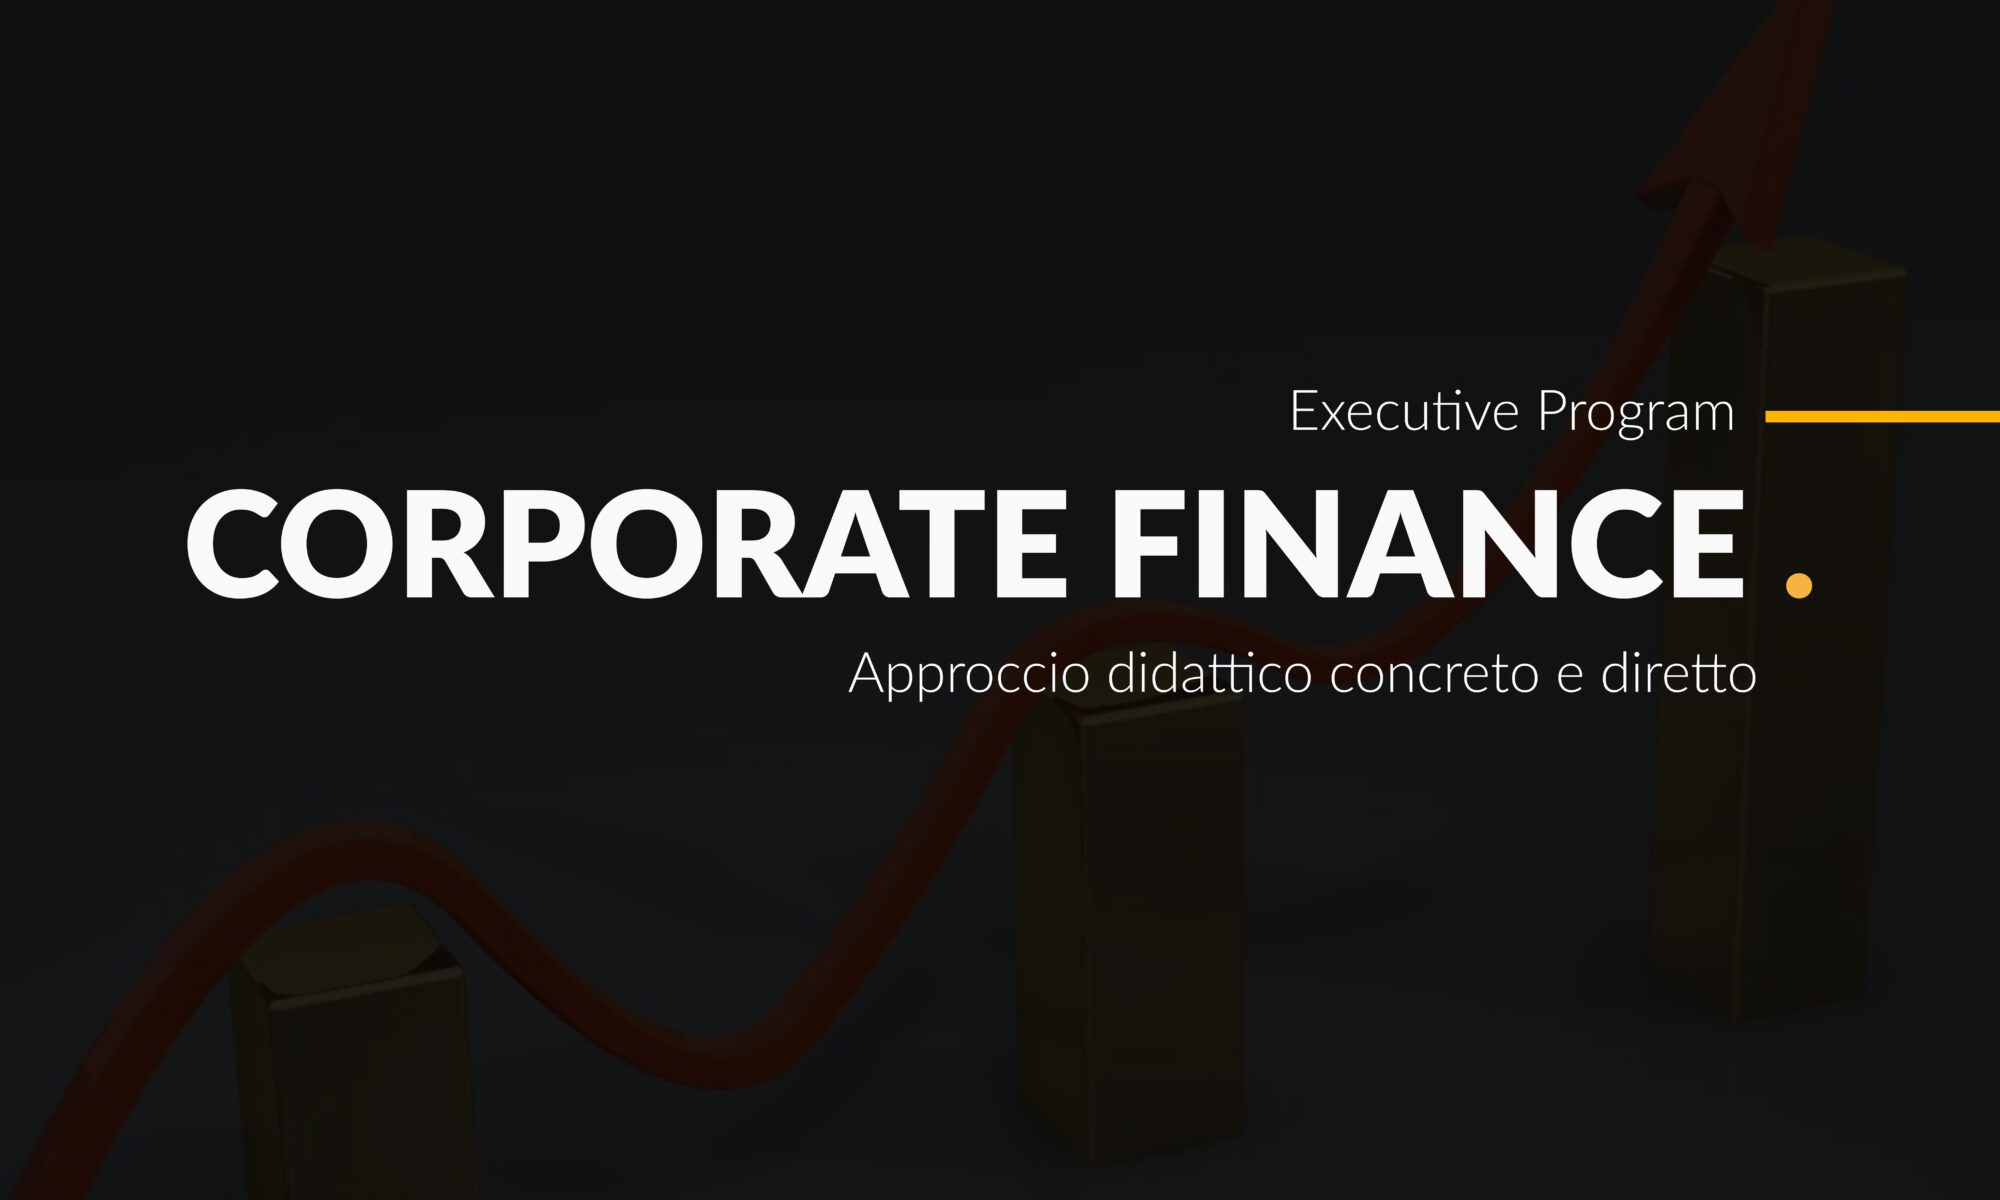 Executive Program in Corporate Finance